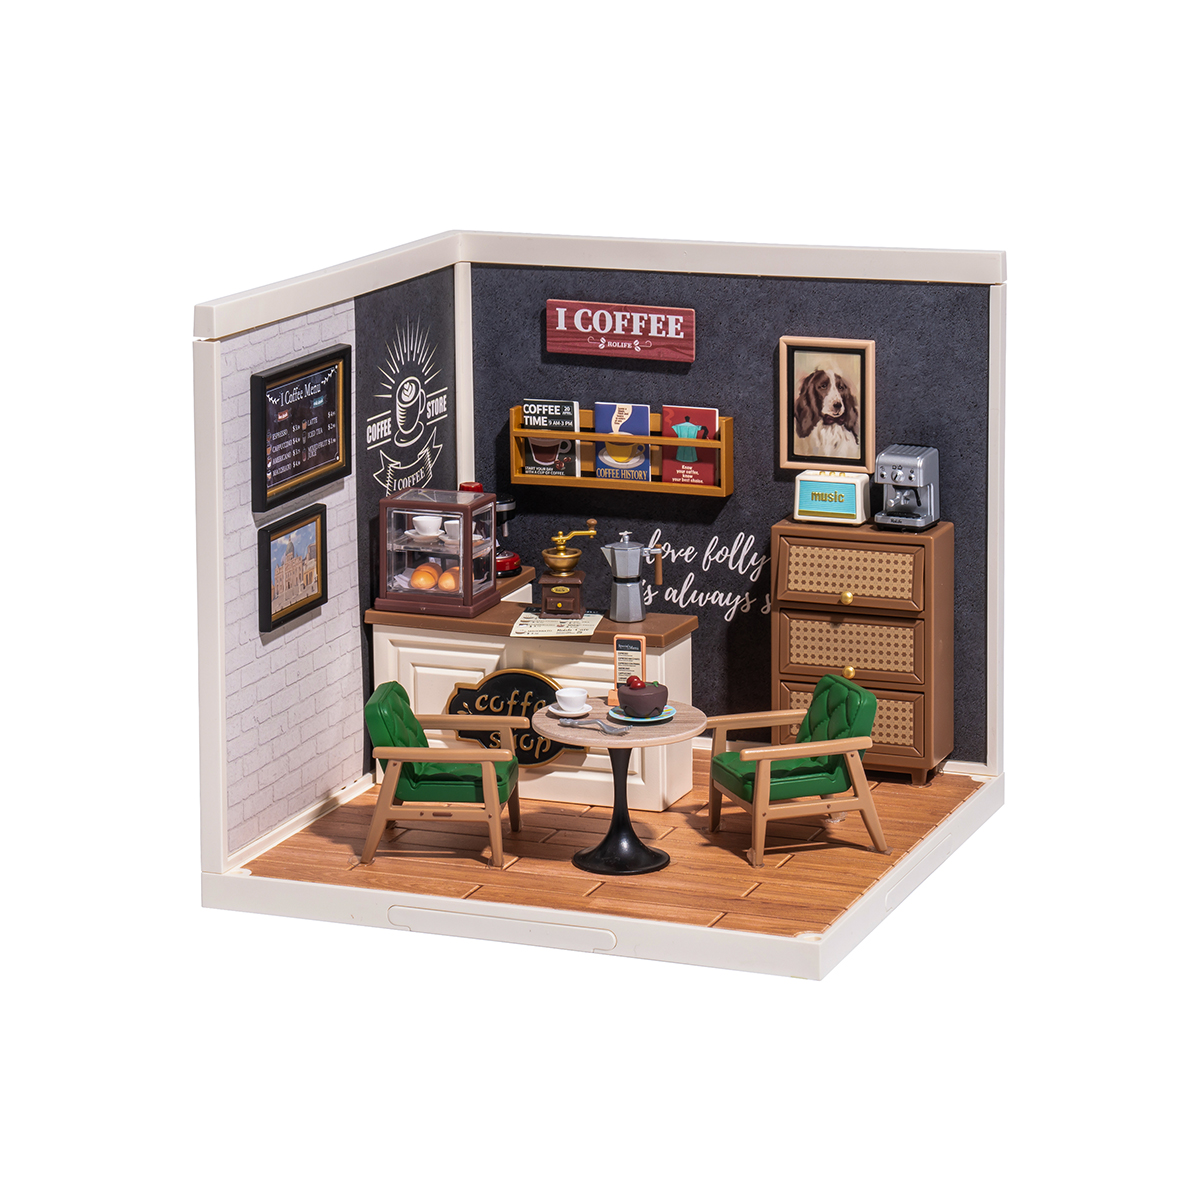 Le salon de thé - Maquette 3D Rolife - Creastore